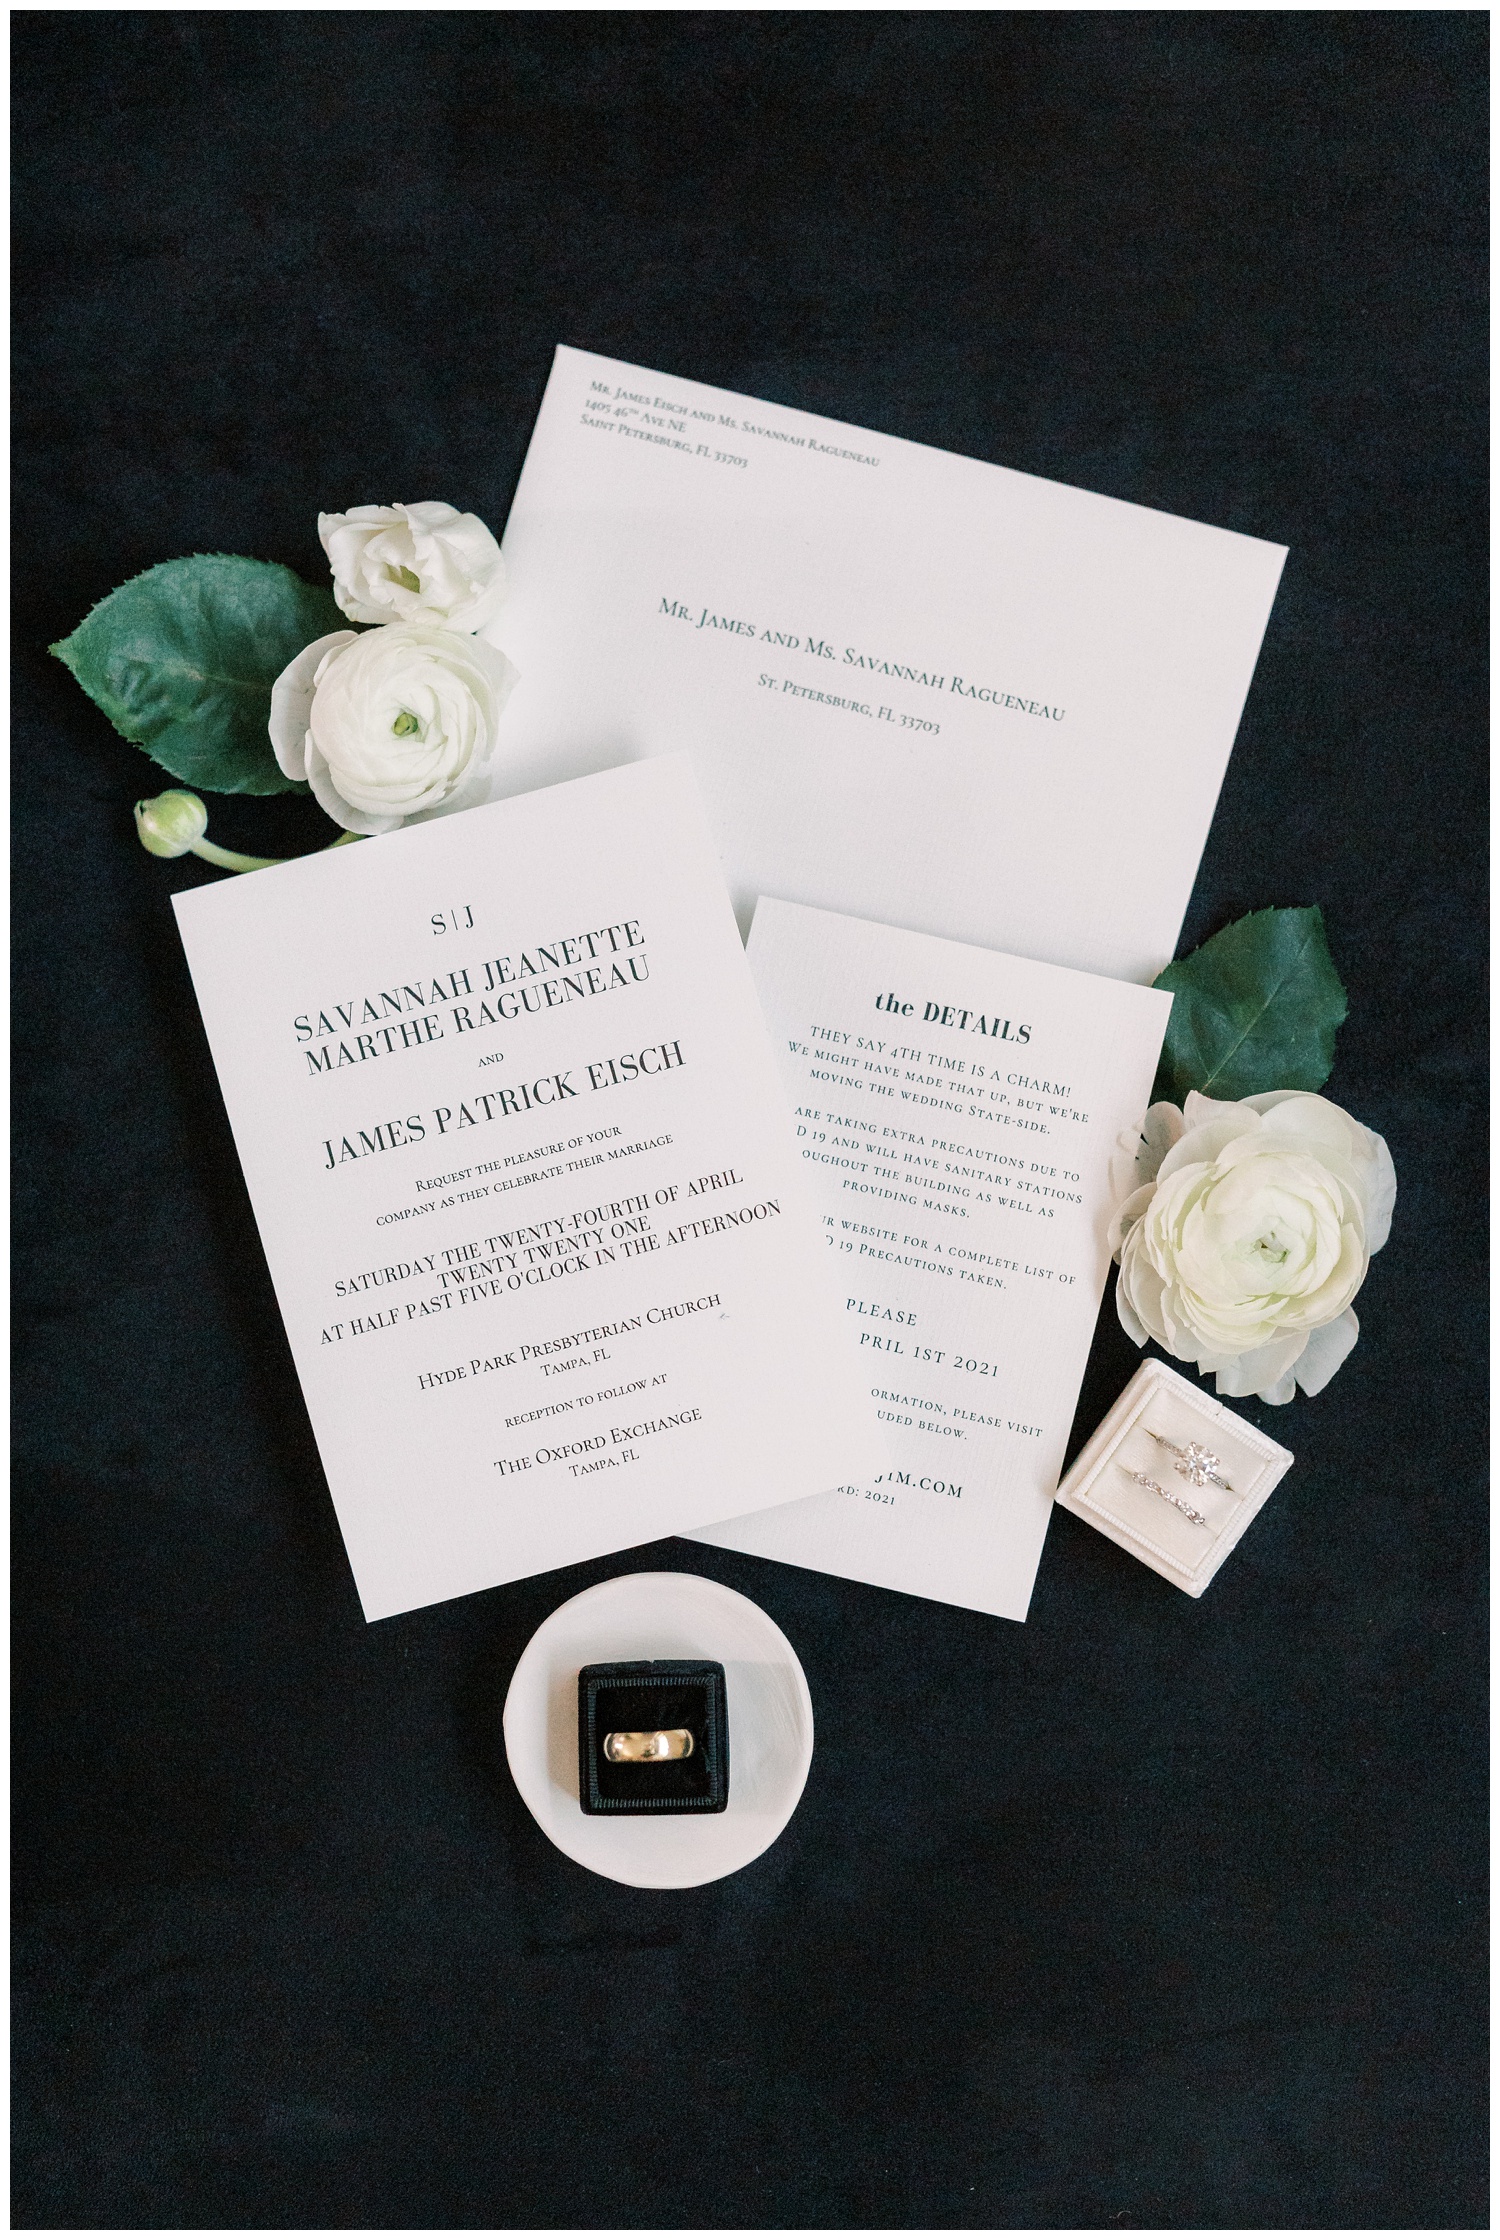 Black and white classic wedding invitations